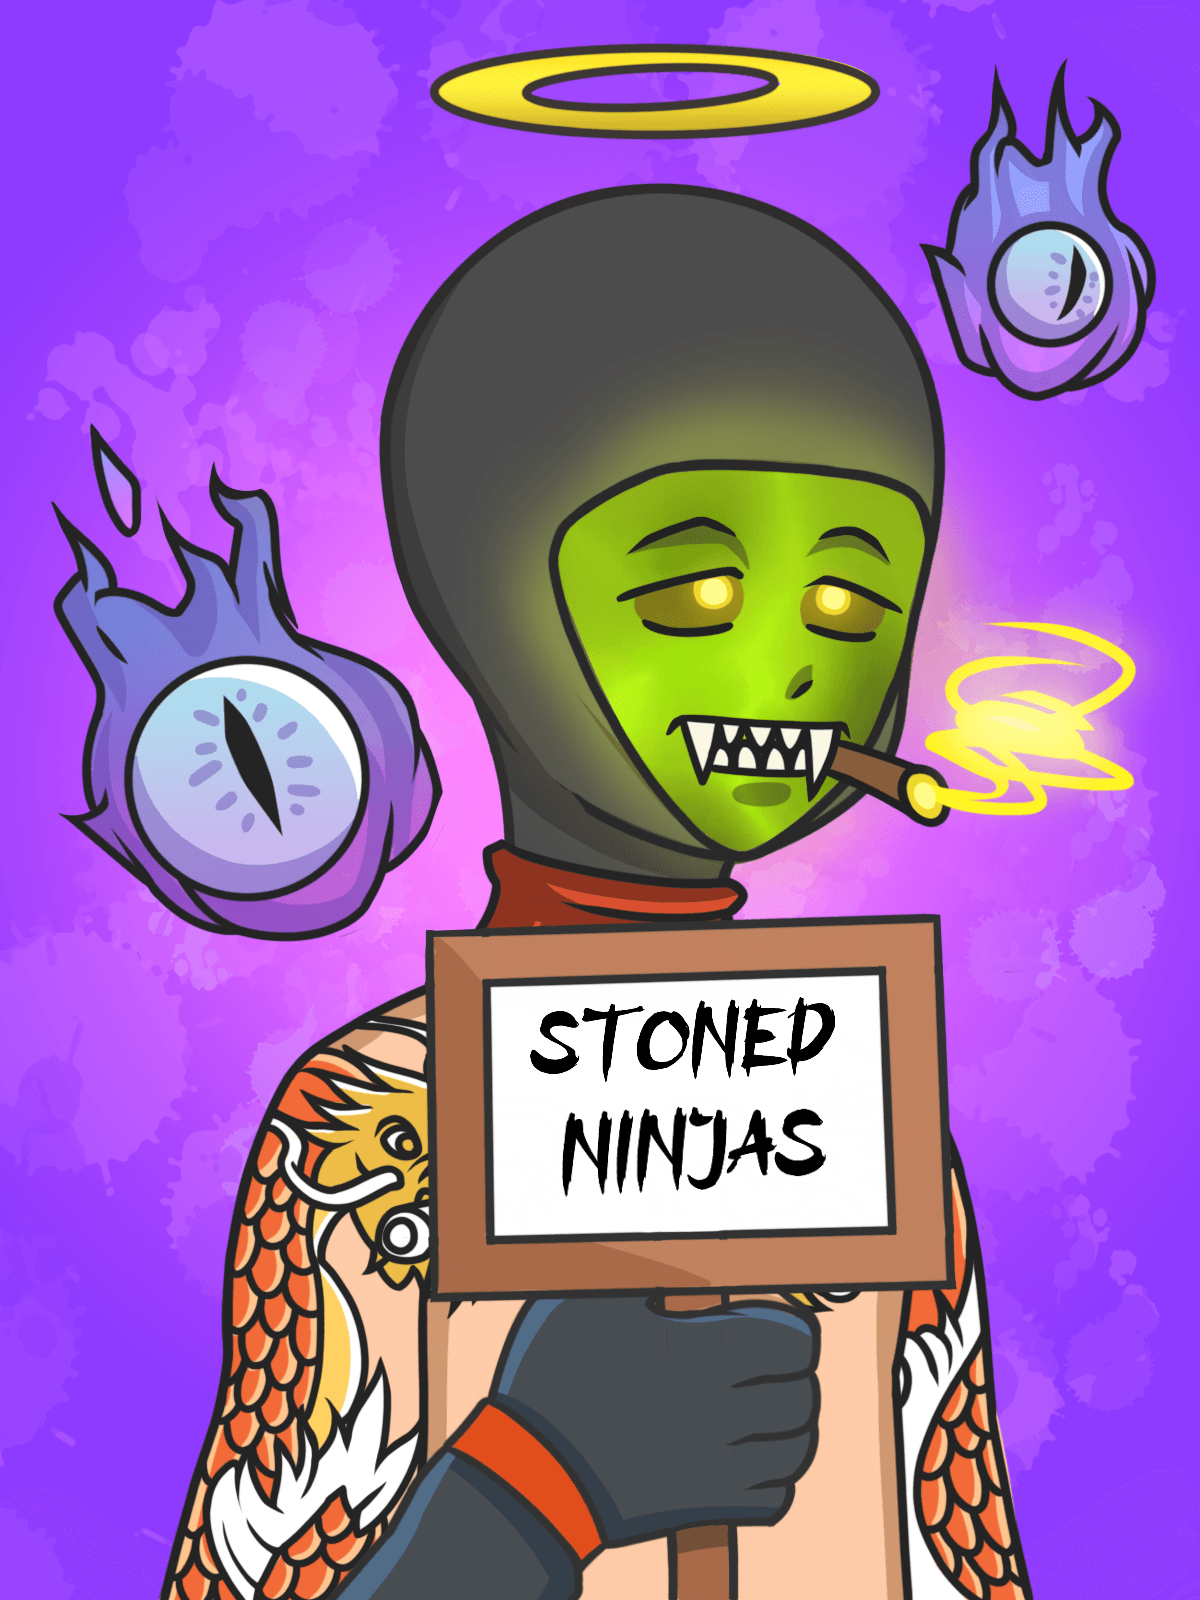 Stoned Ninjas #2918